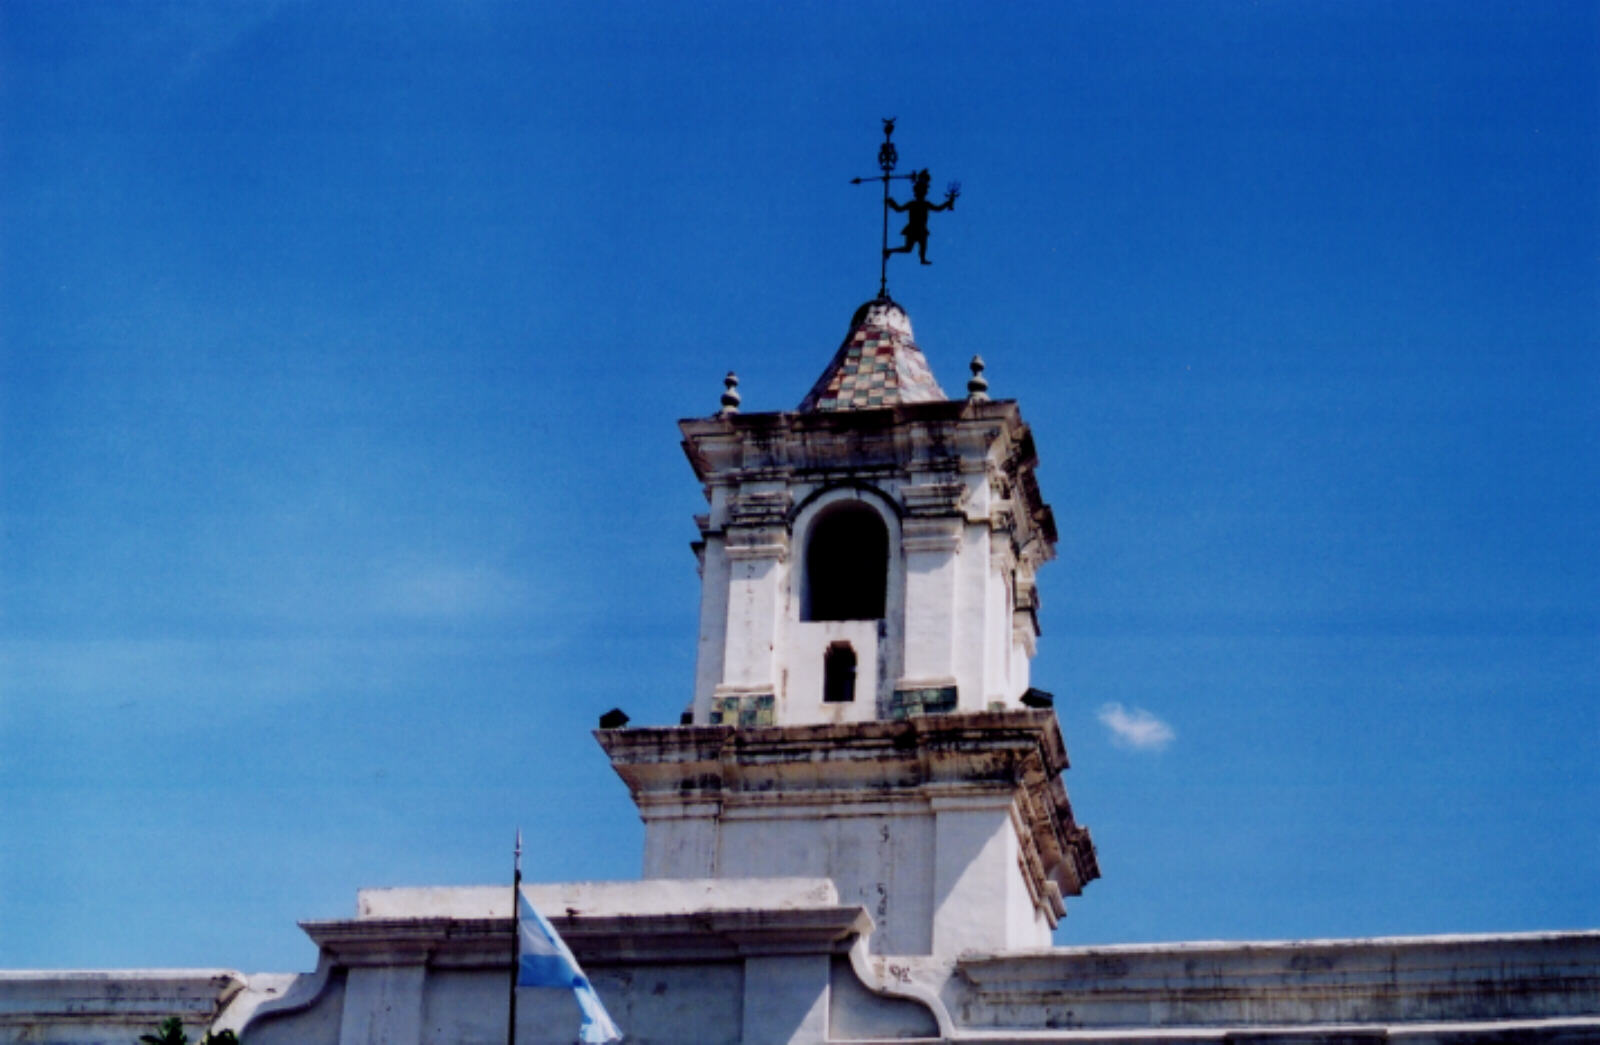 Cabildo Historico on Plaza 9th July in Salta, Argentina